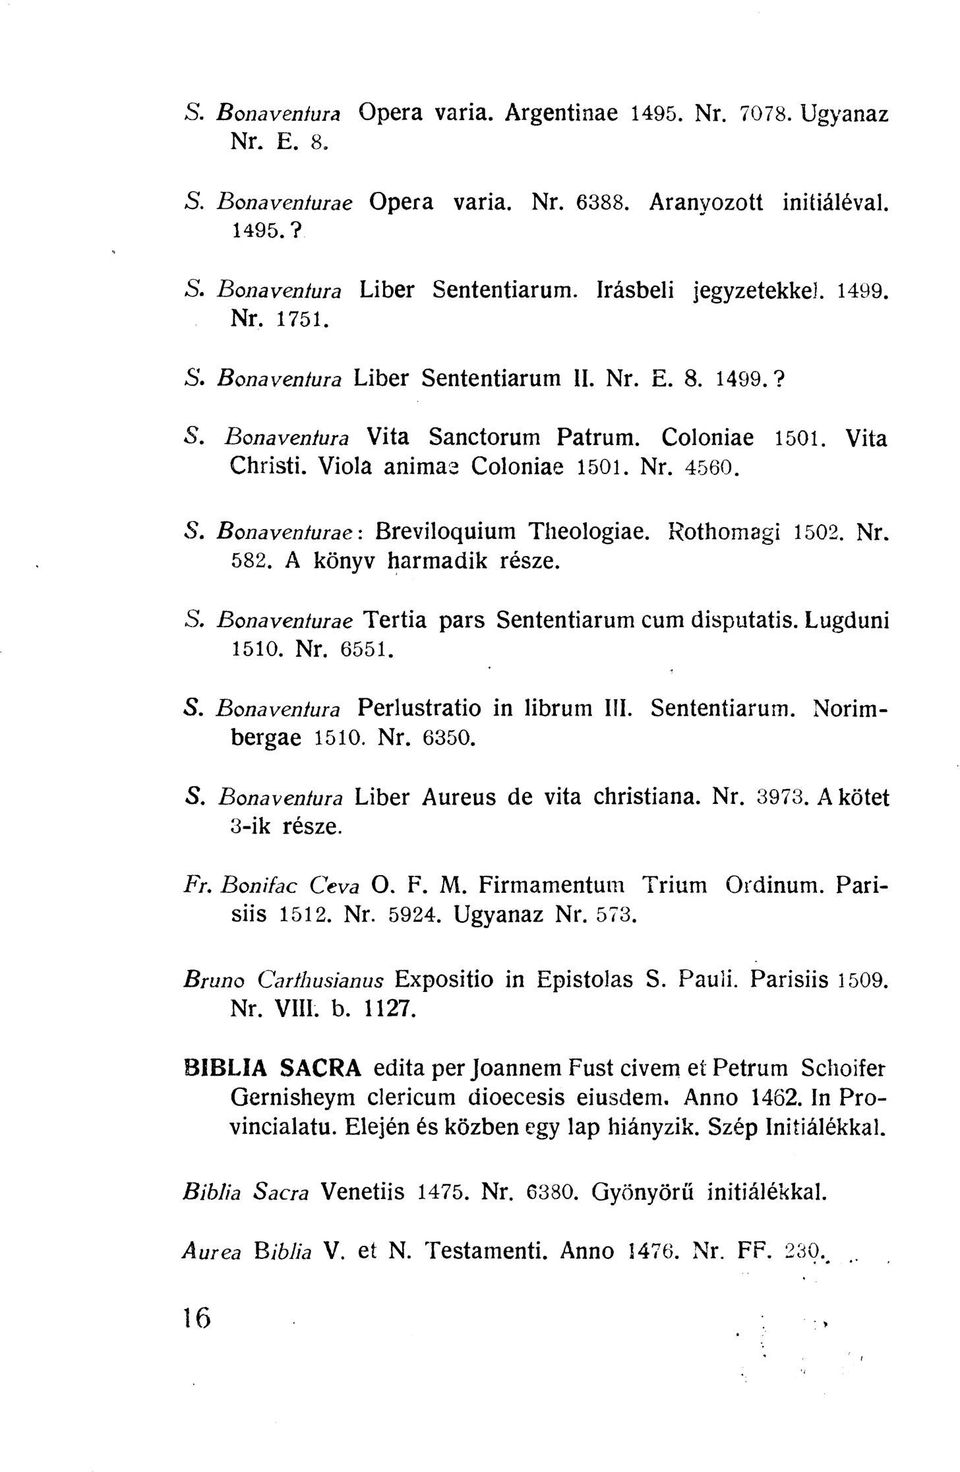 Rothomagi 1502. Nr. 582. A könyv harmadik része. S. Bonaventurae Tertia pars Sententiarum cum disputatis. Lugduni 1510. Nr. 6551. 5. Bonaveníura Perlustratio in librum III. Sententiarum. Norimbergae 1510.